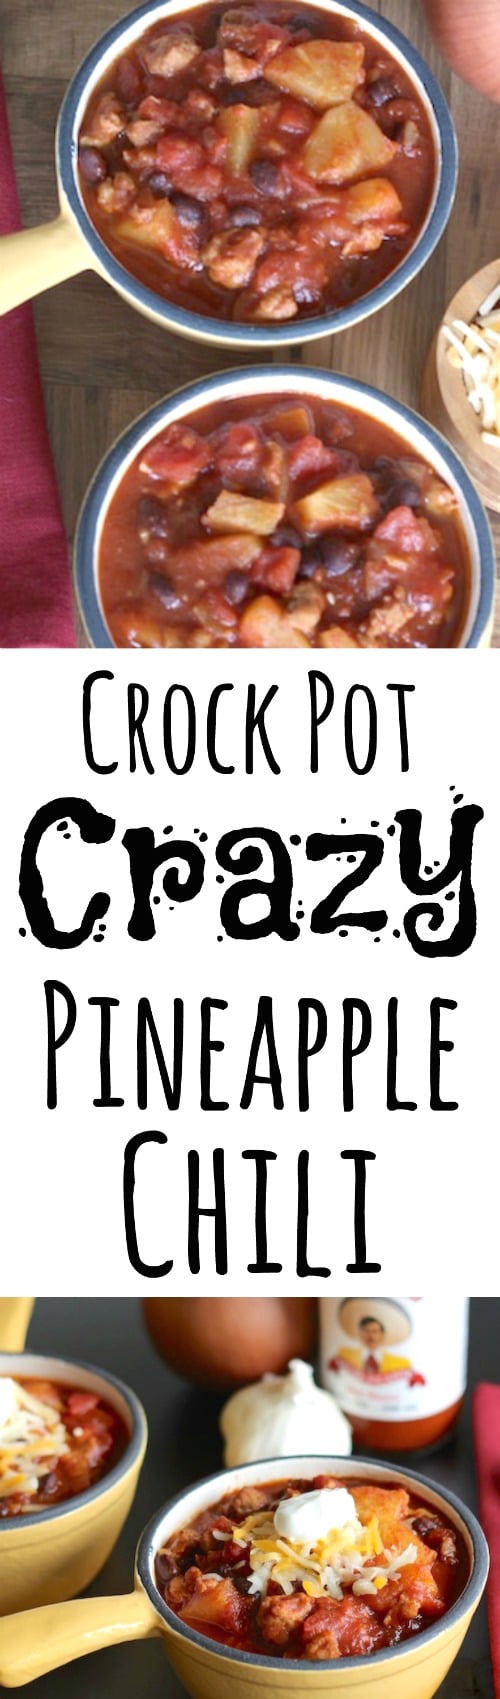 Crock-Pot Crazy Pineapple Chili Recipe {www.TwoHealthyKitchens.com}